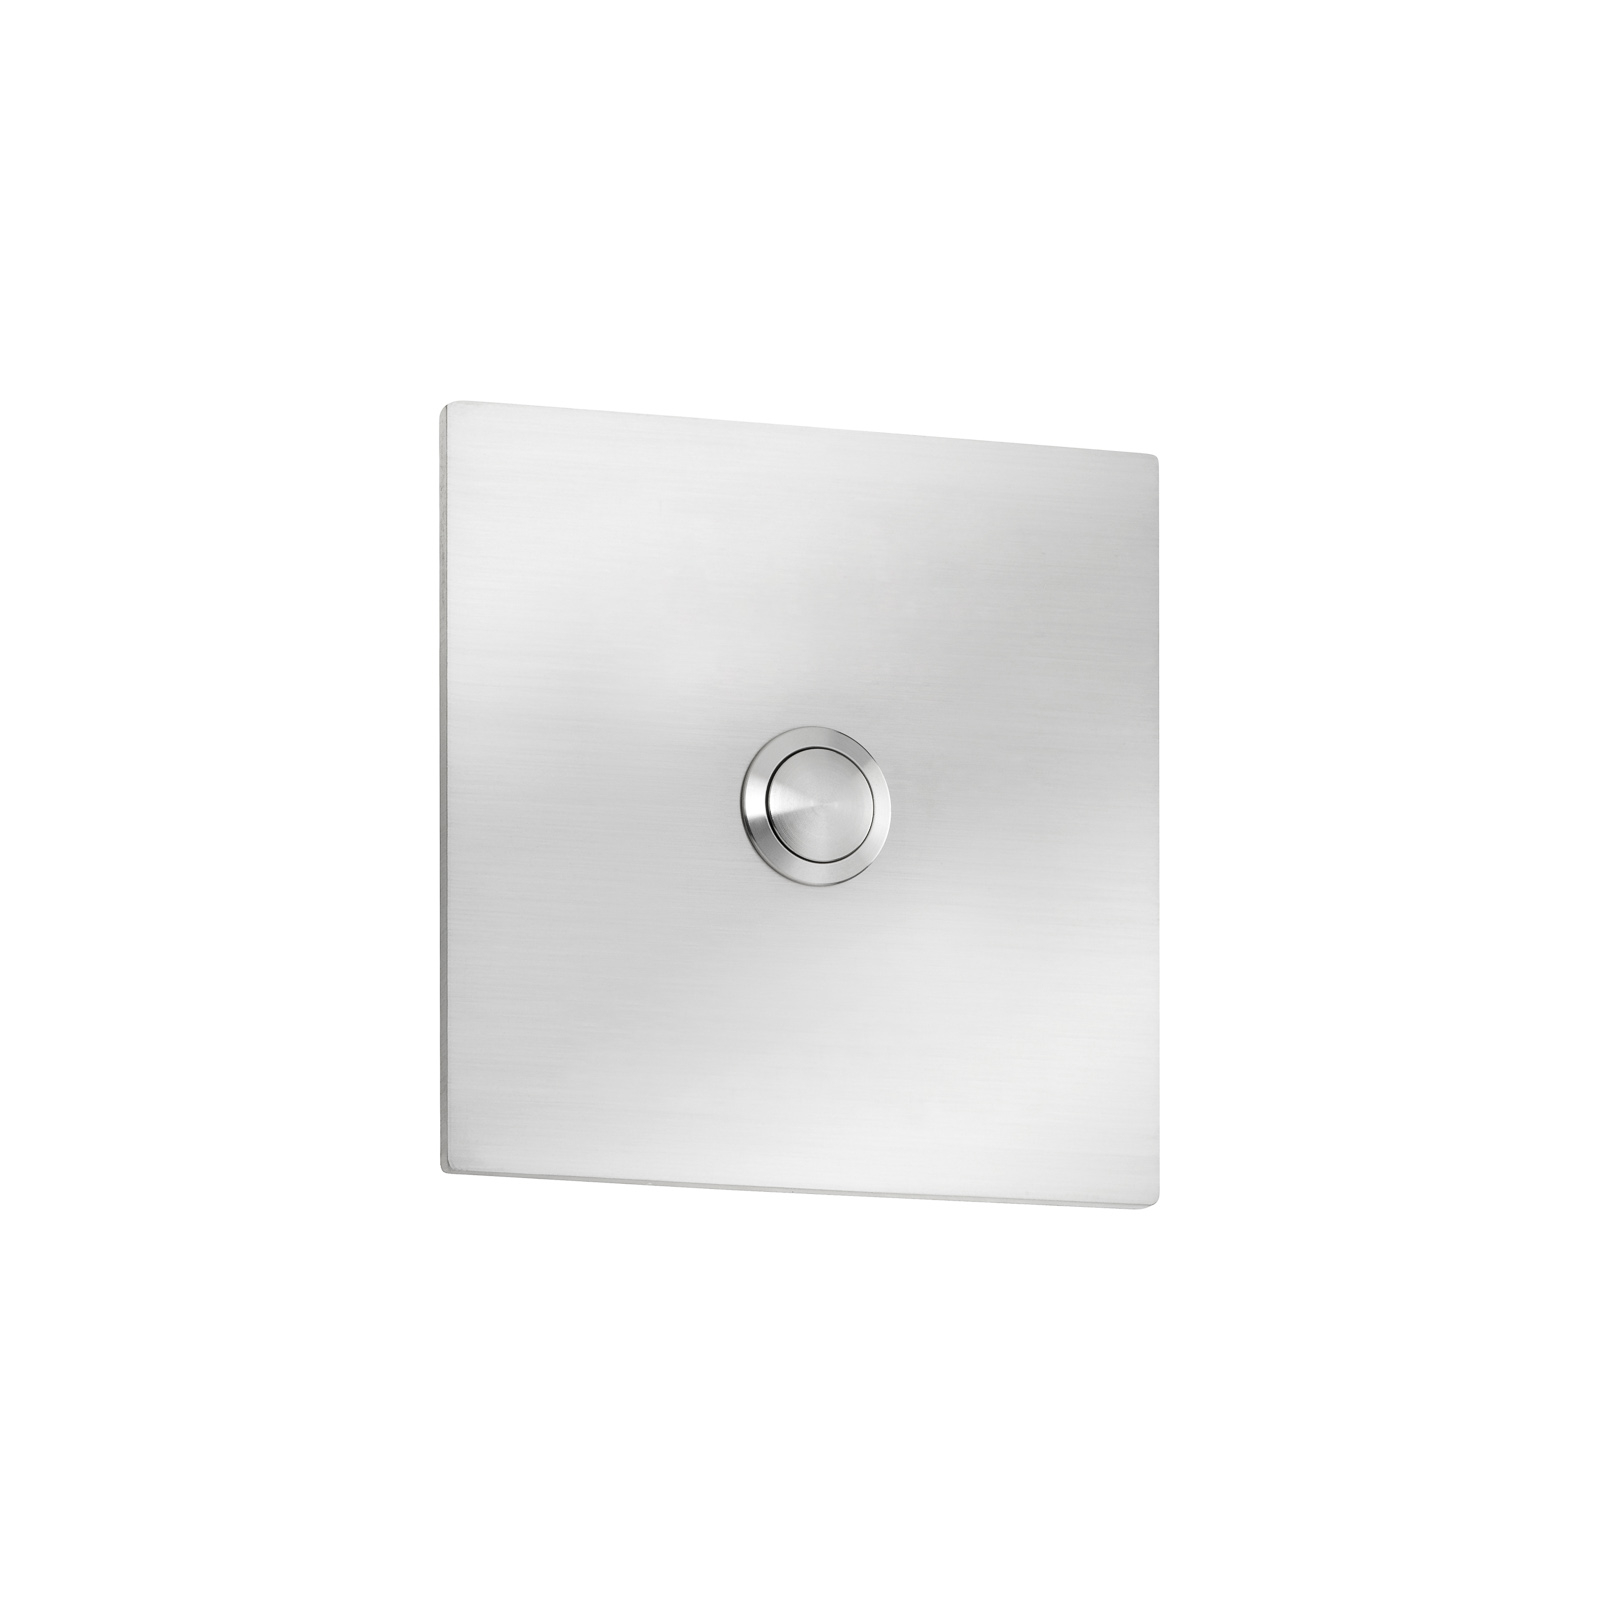 Quadrat Subtle Doorbell Coverplate